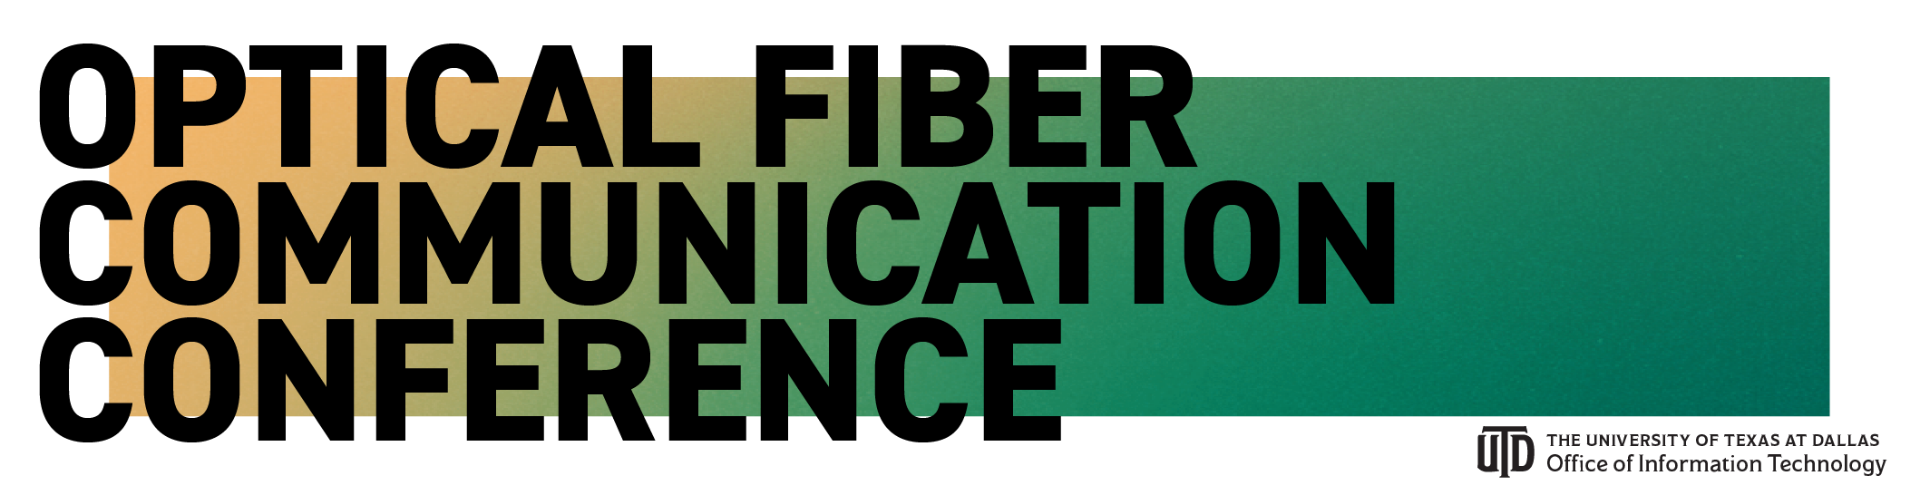 Optical Fiber Communication Conference